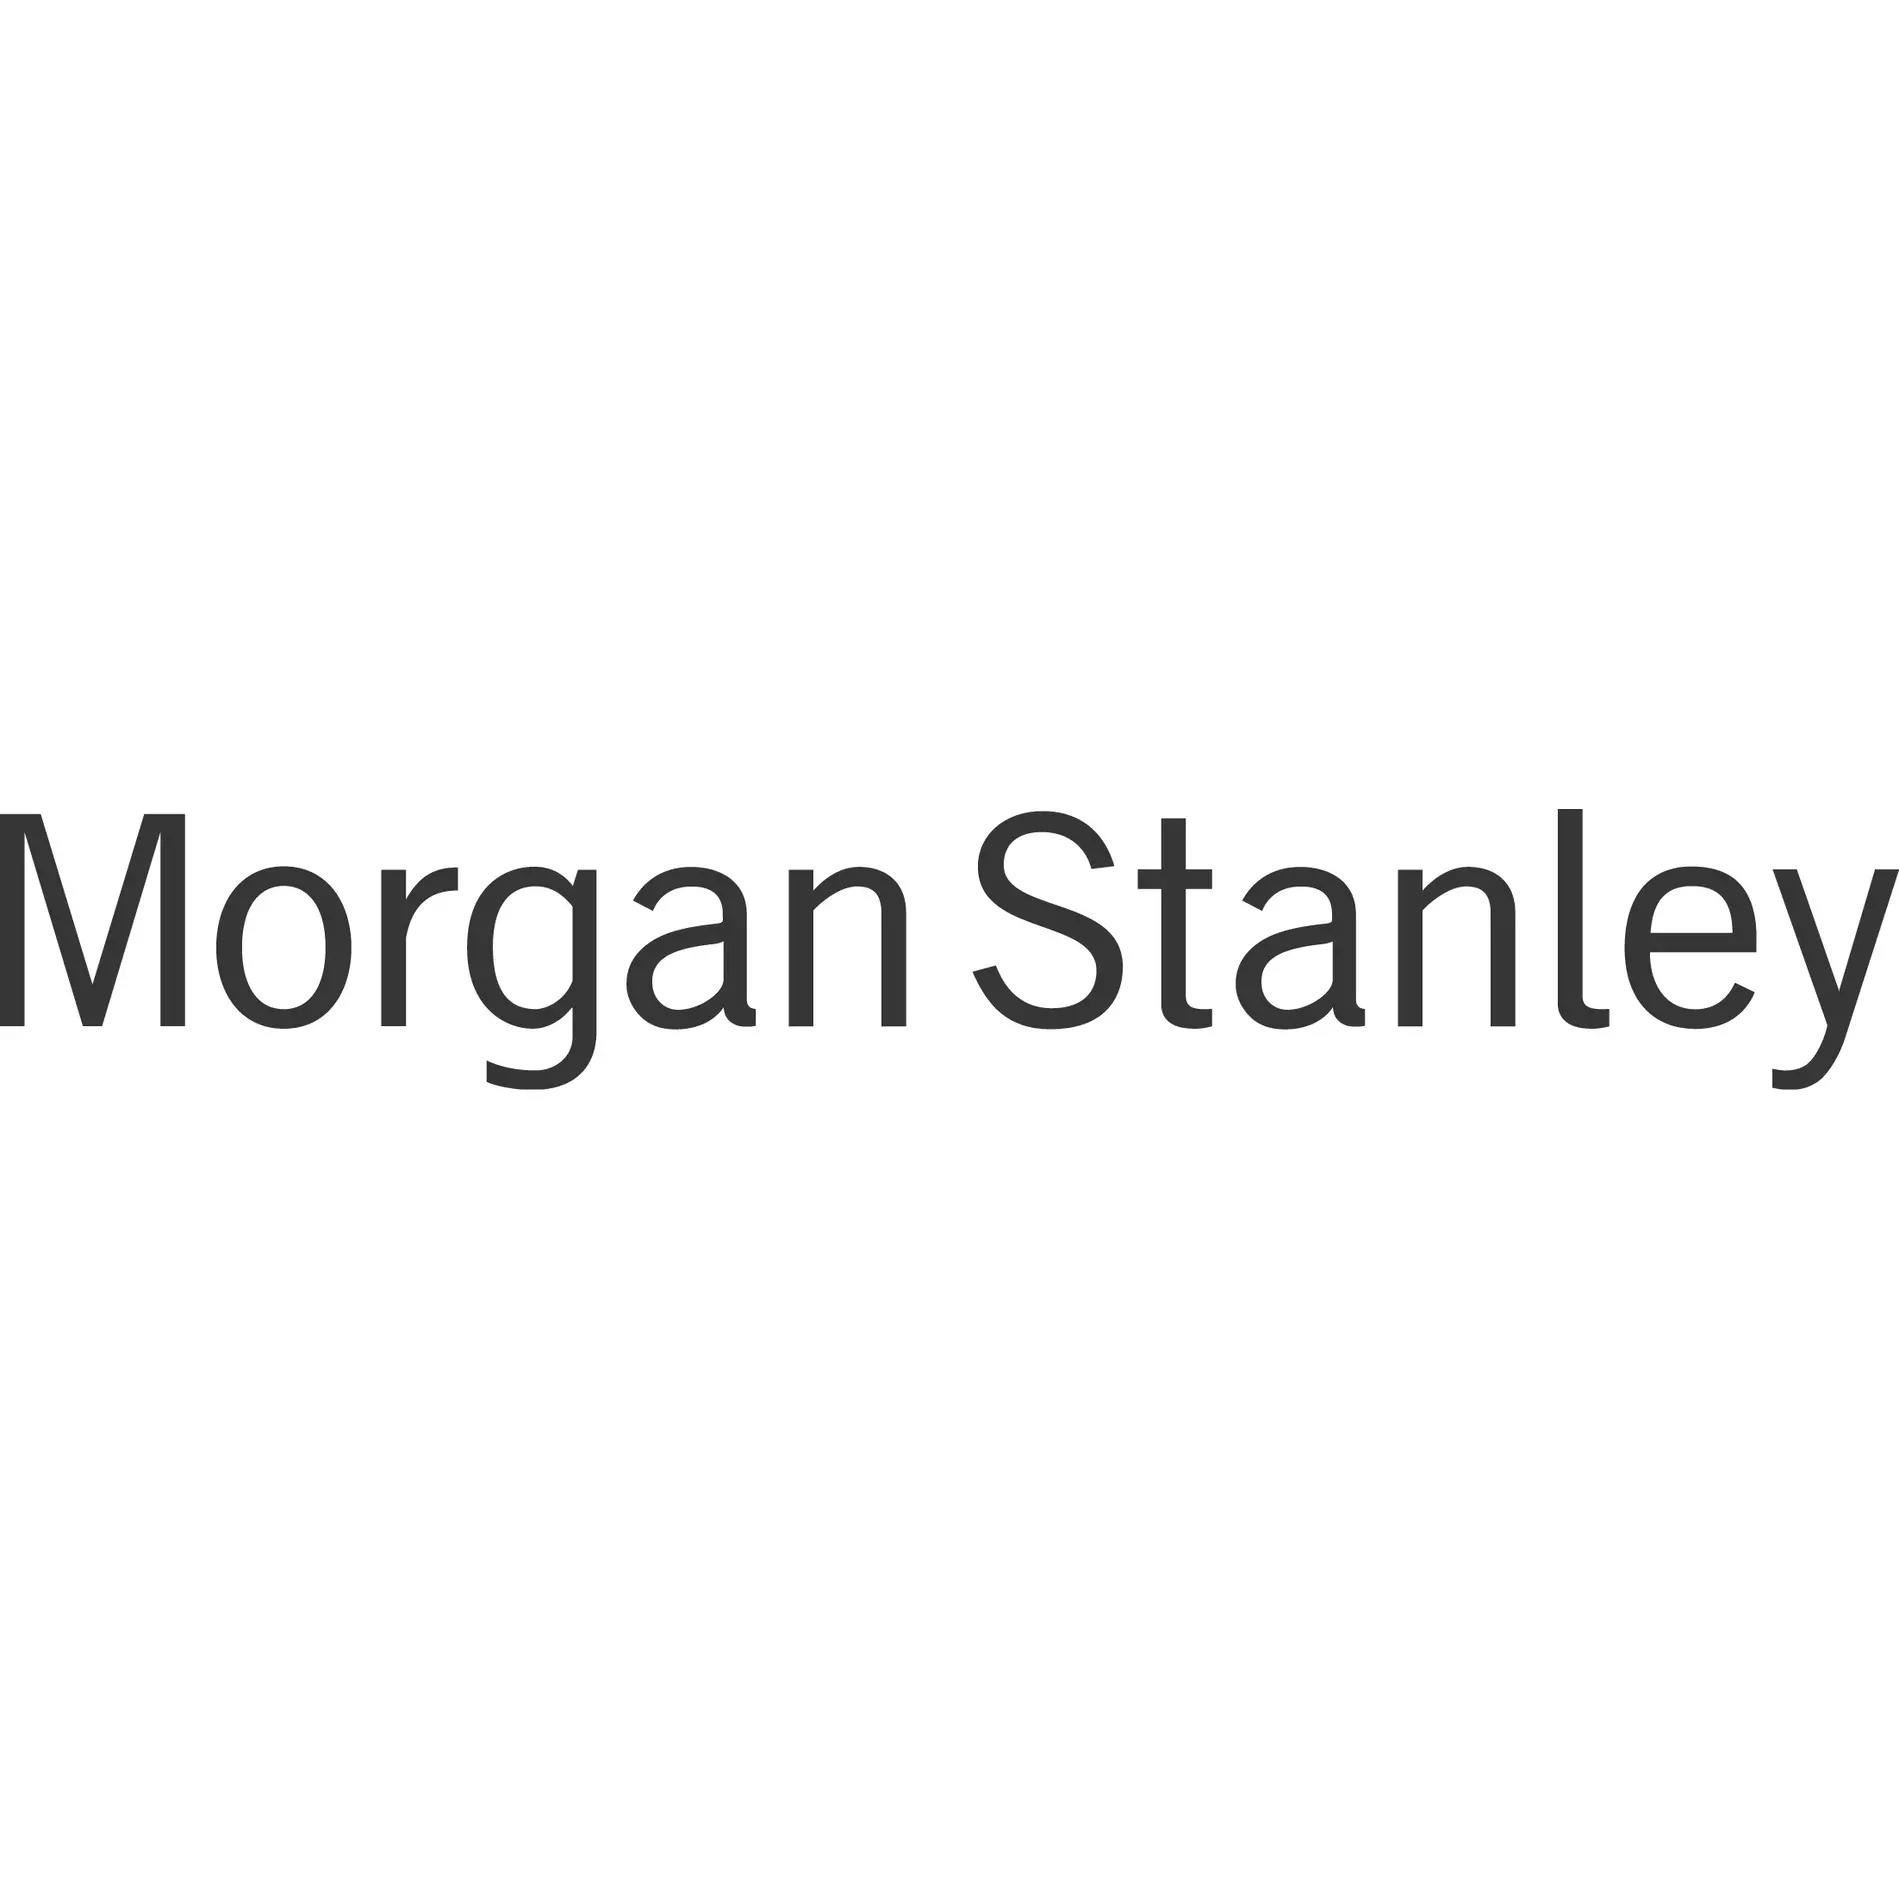 The Schwartz Group - Morgan Stanley Logo